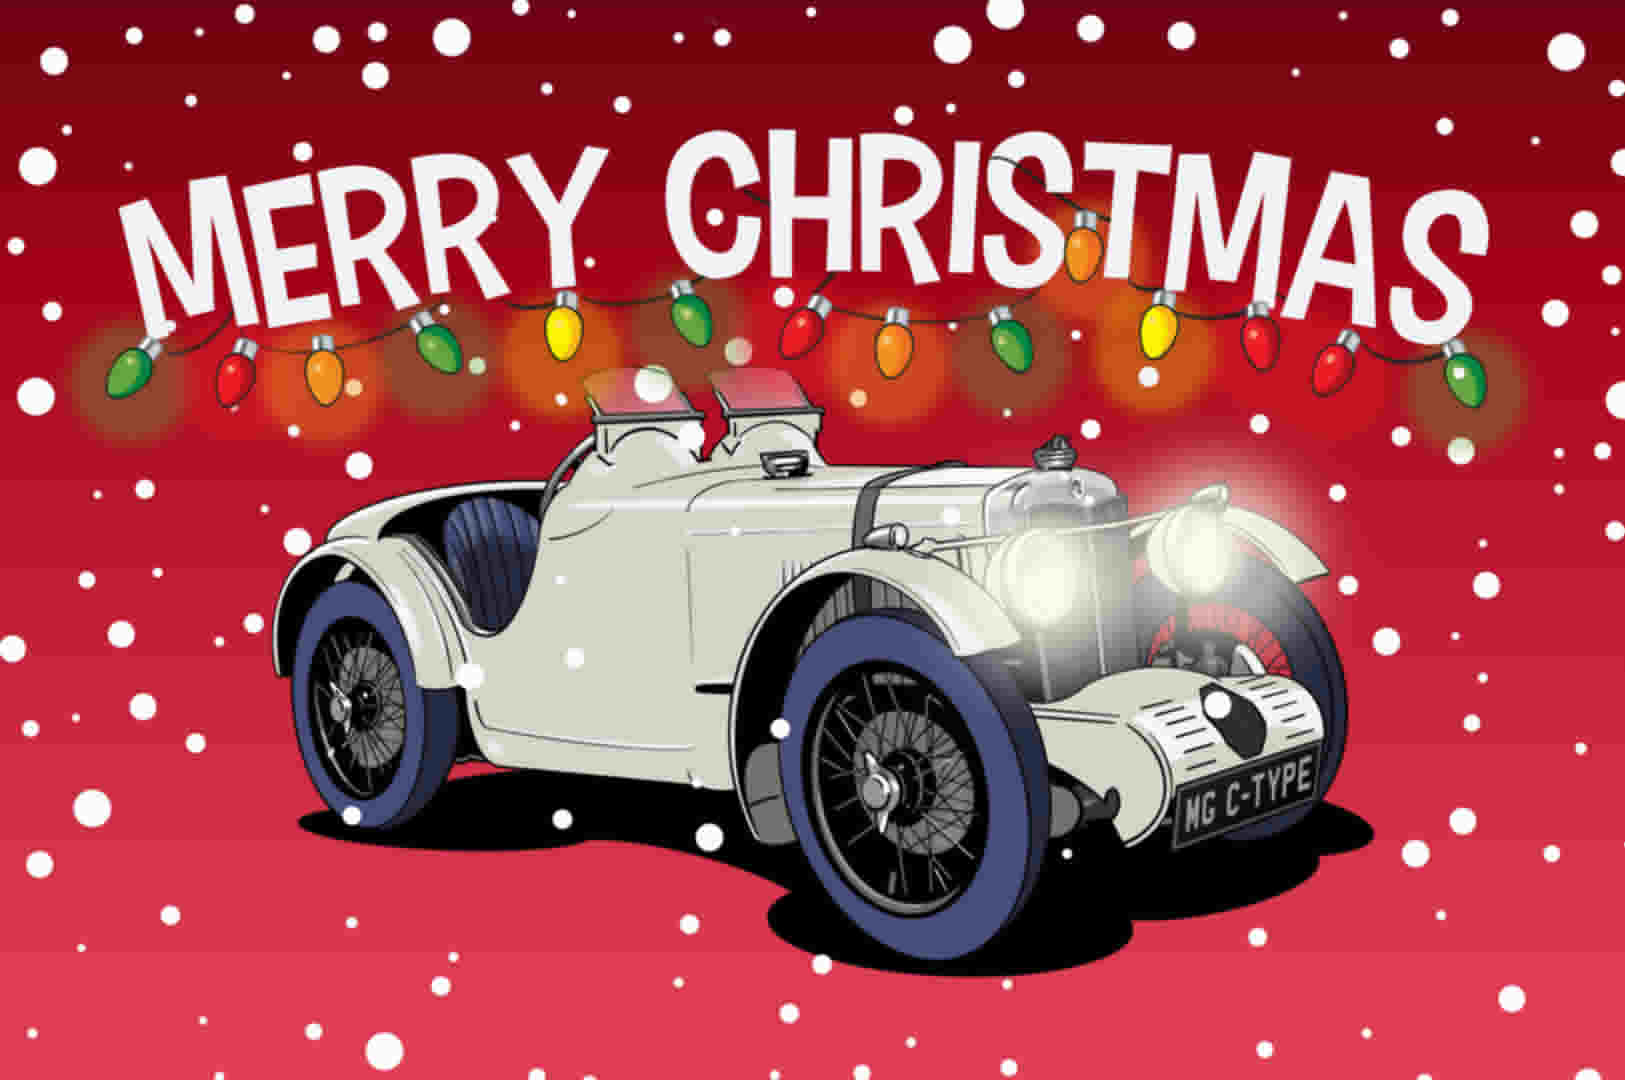 MG C Type Vintage Car Christmas Card